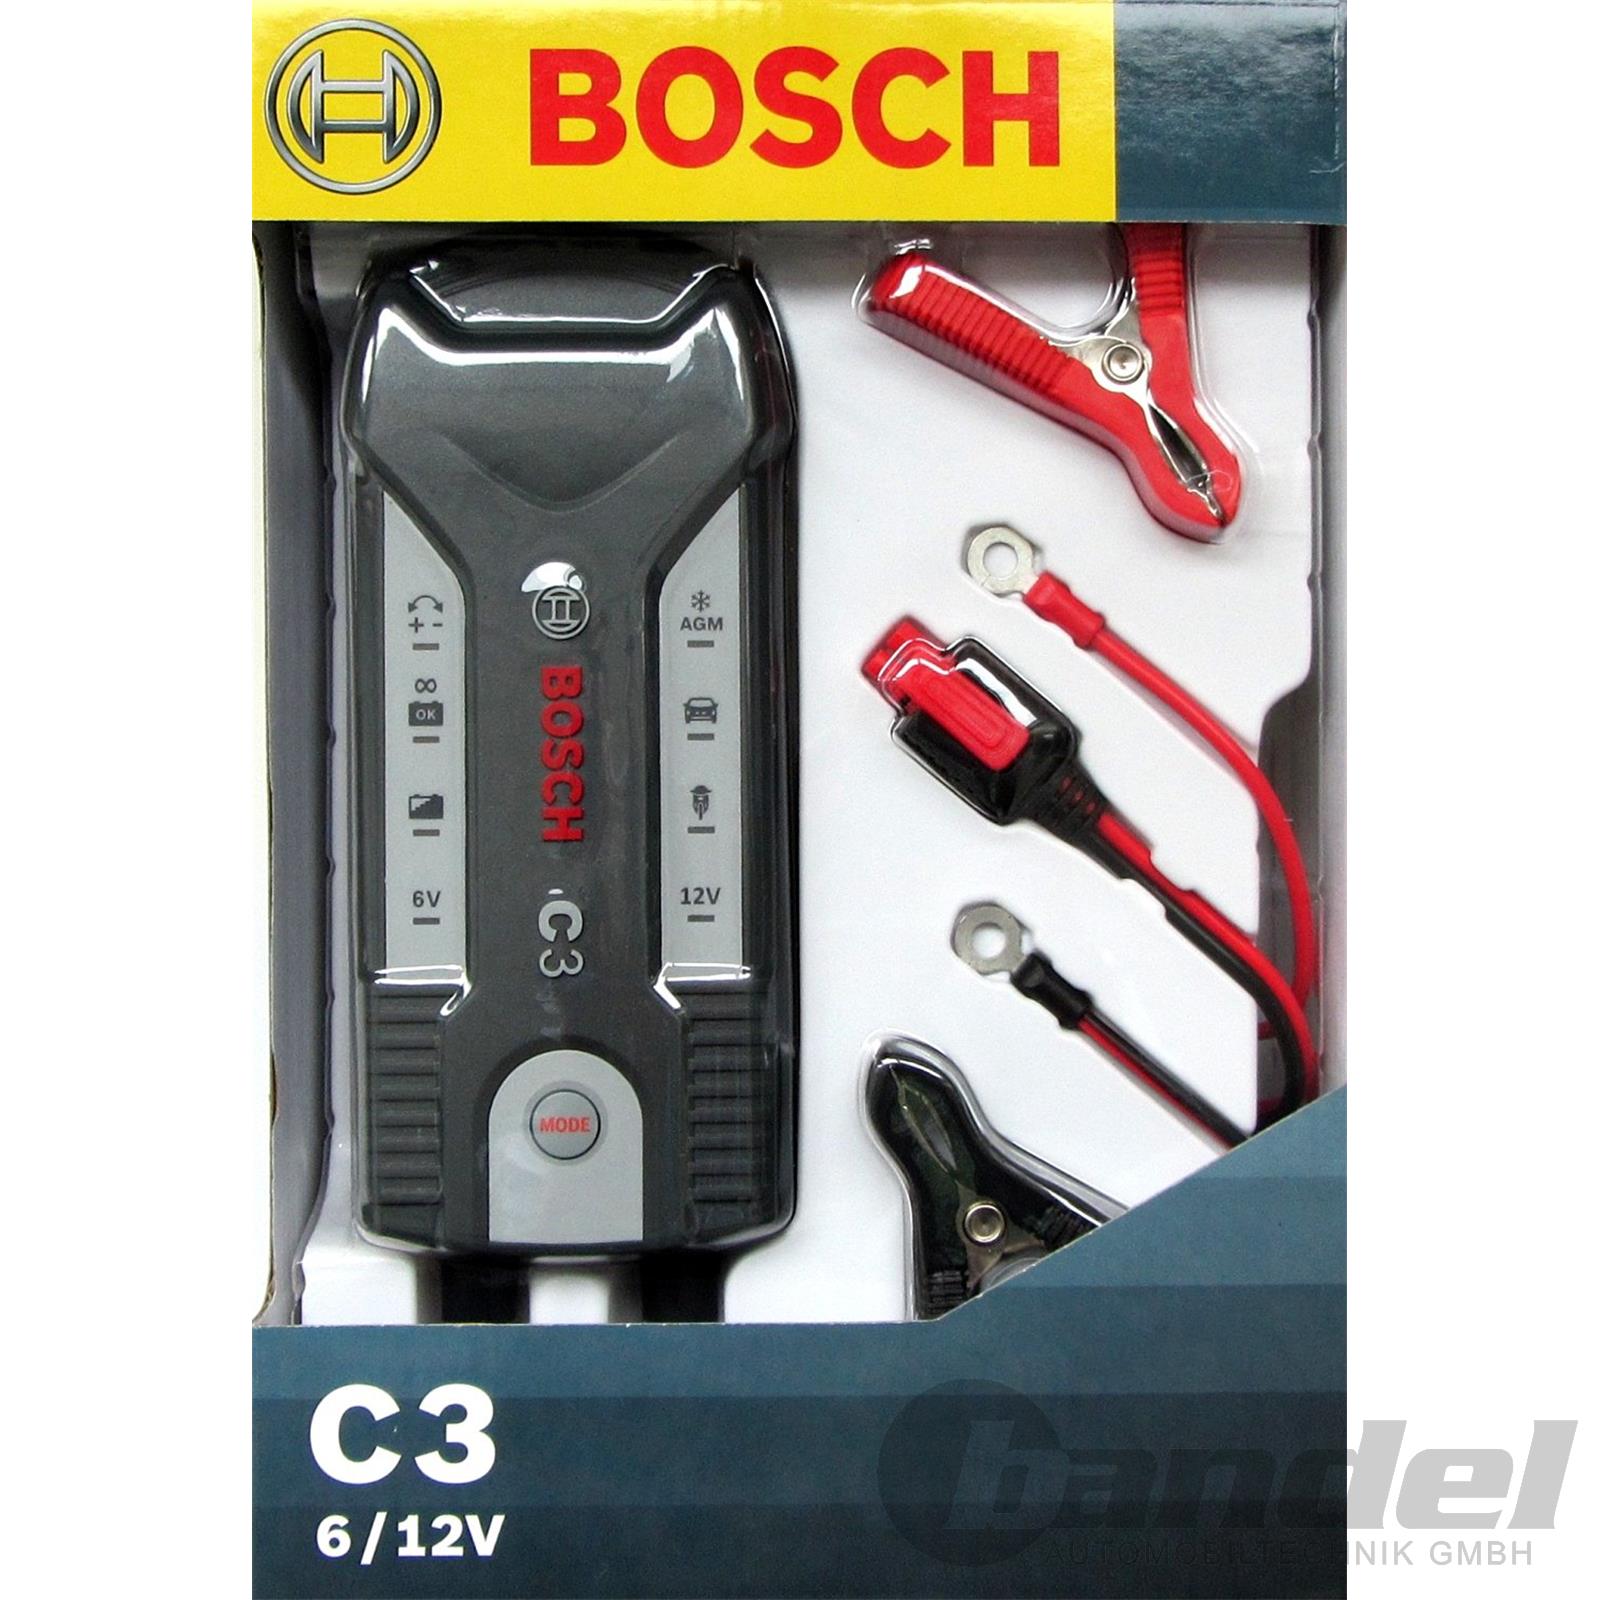 Bosch Autobatterie Ladegerät C3 in Baden-Württemberg - Amstetten